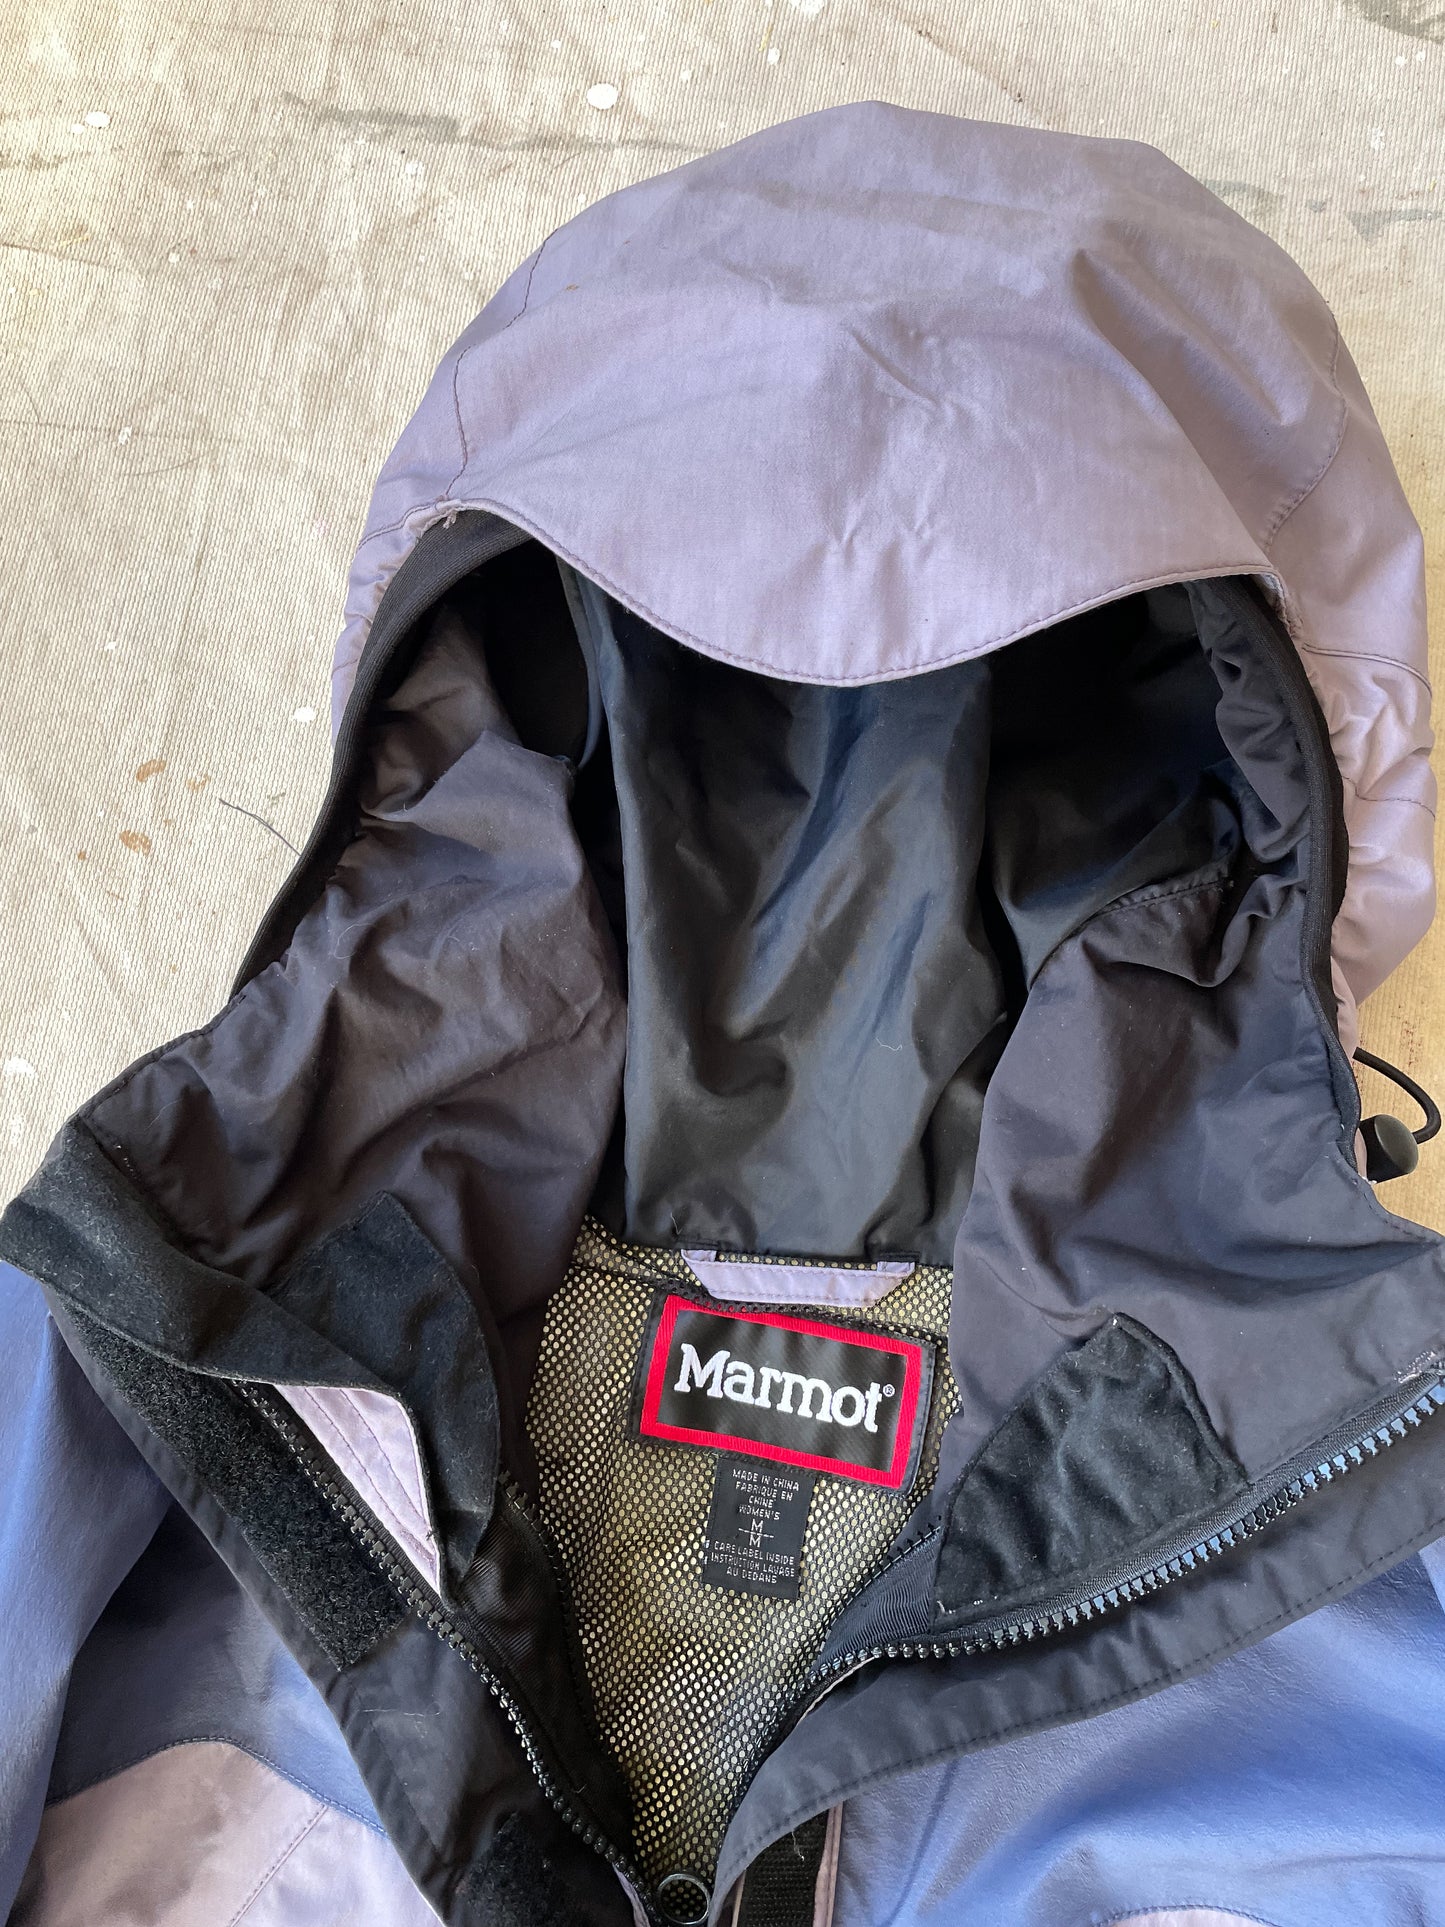 Marmot Jacket—[M]